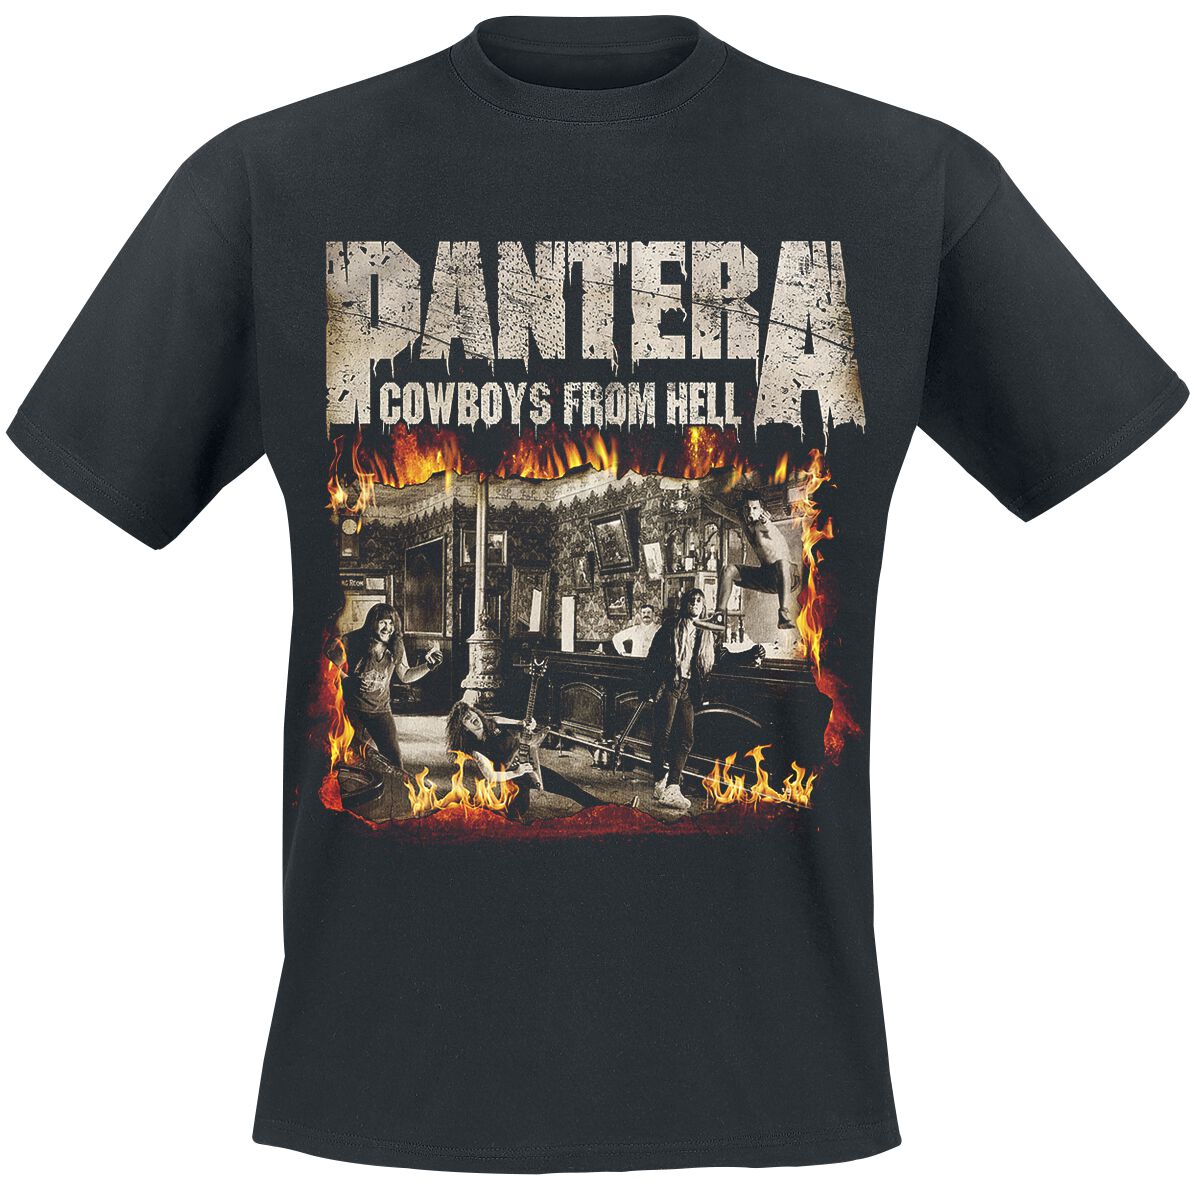 Pantera T-Shirt - Cowboys From Hell - Fire Frame - S bis XXL - für Männer - Größe L - schwarz  - Lizenziertes Merchandise!